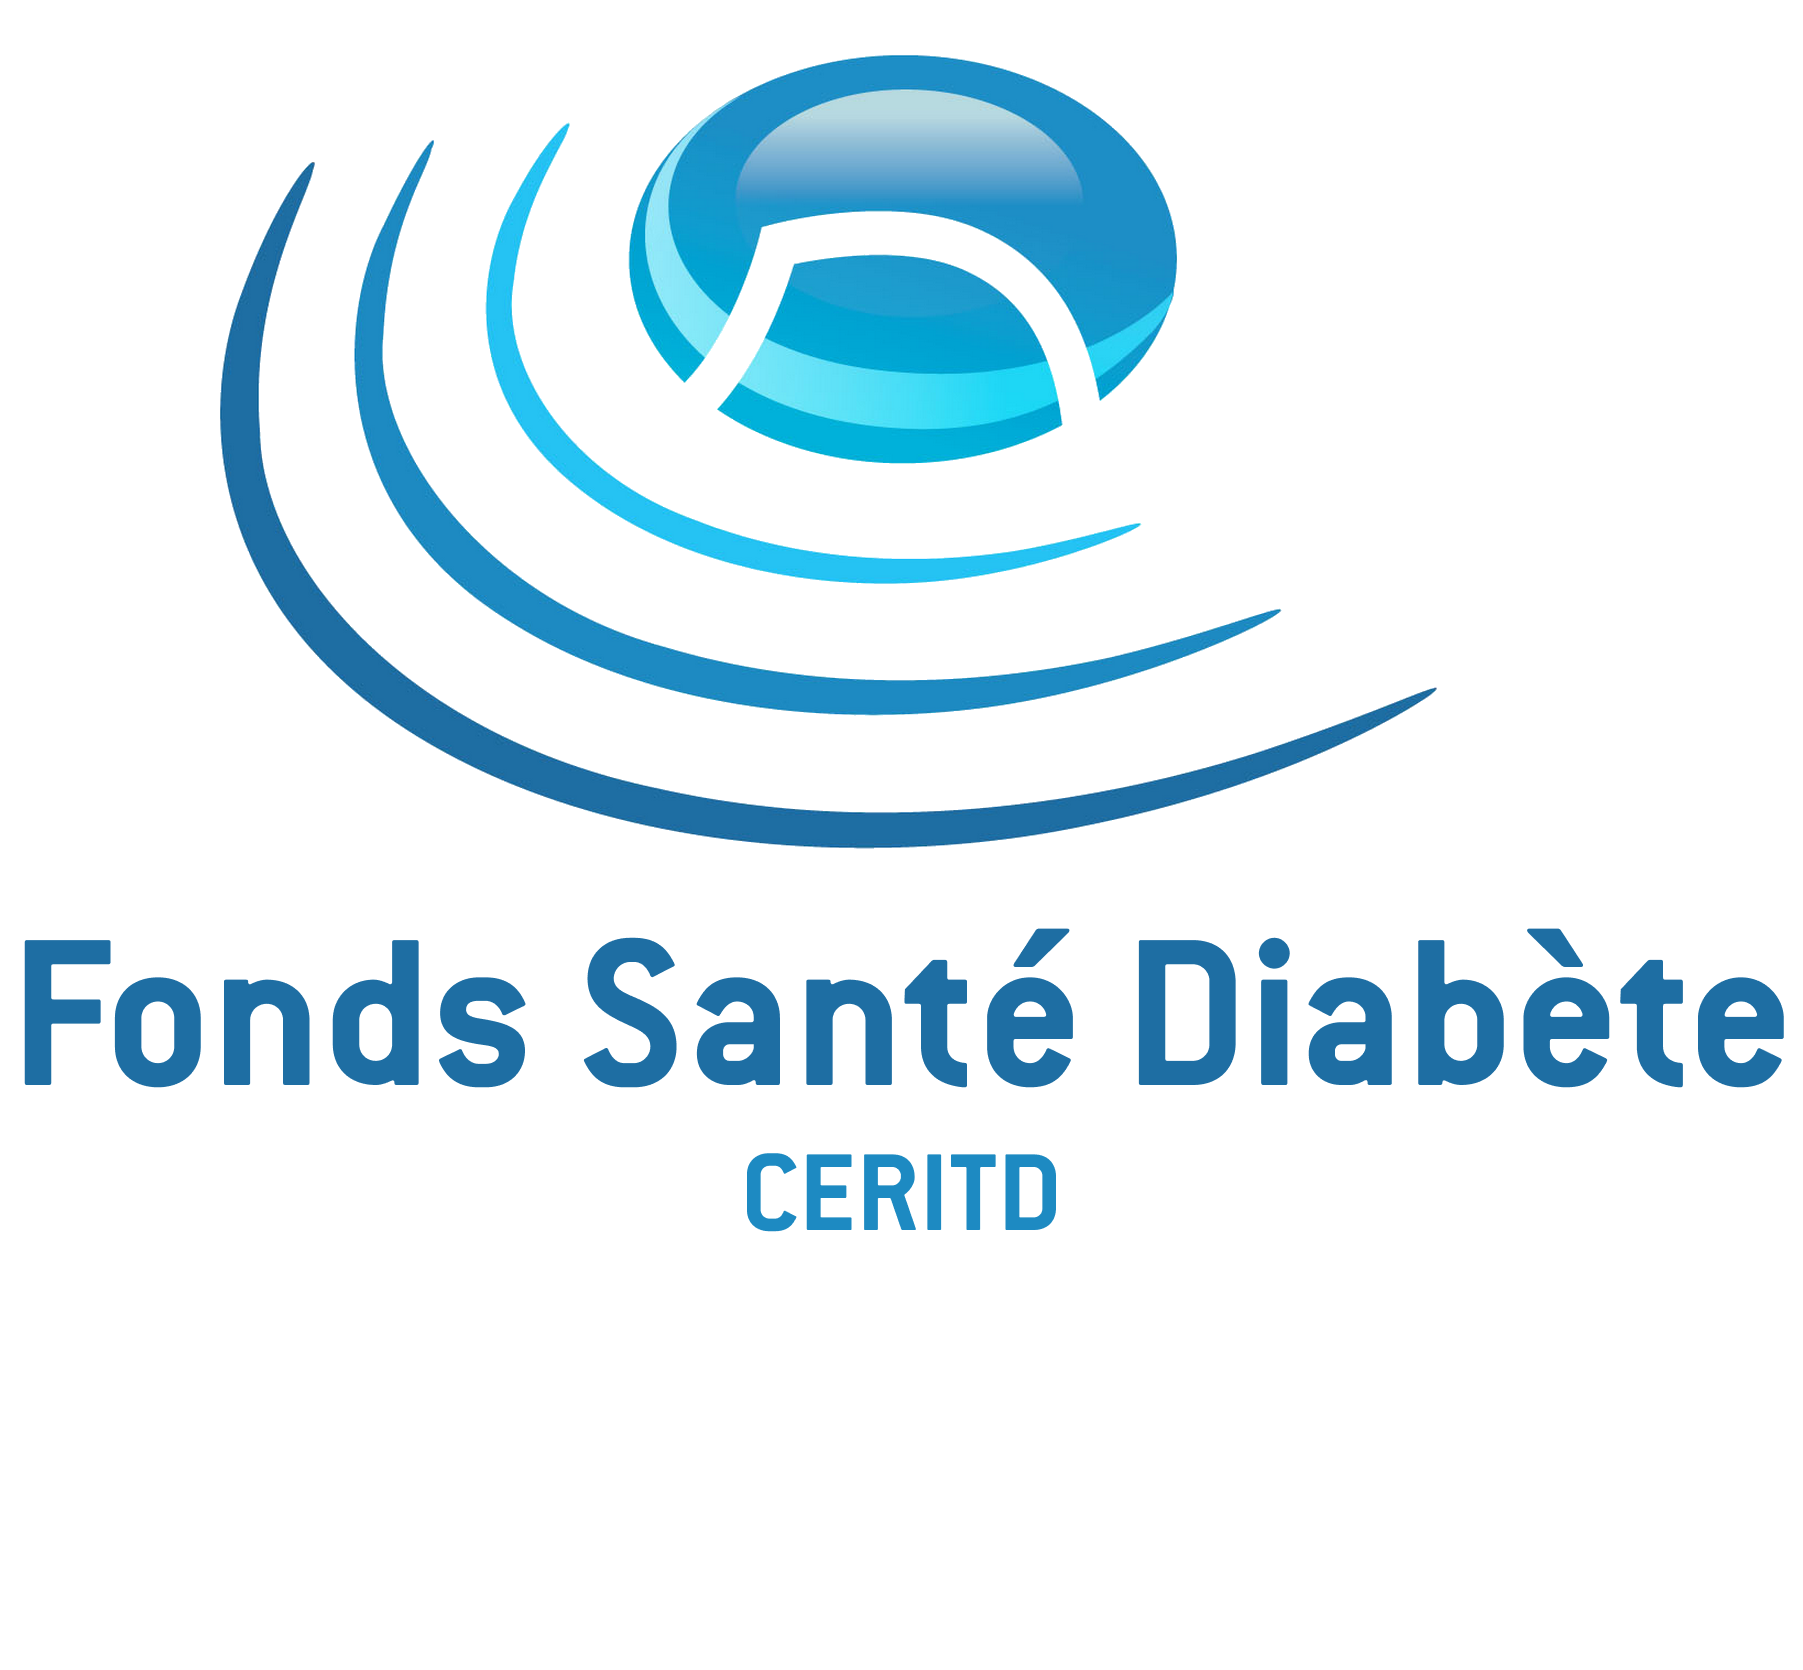 Fonds Santé Diabète